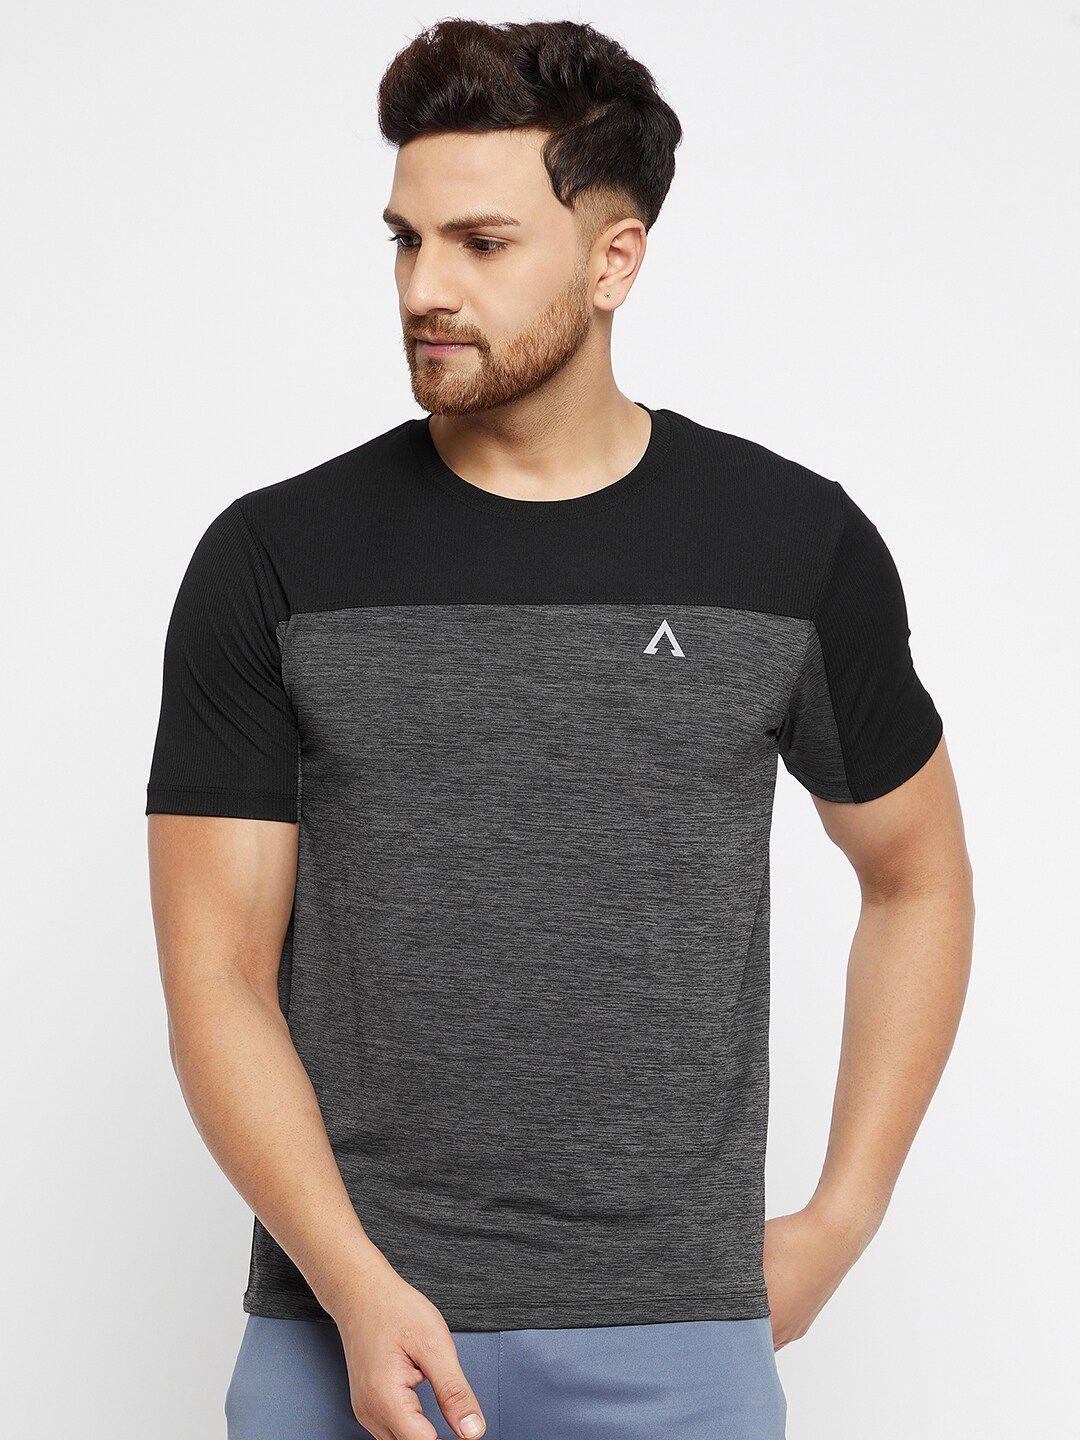 austiex men grey & black colourblocked sports t-shirt